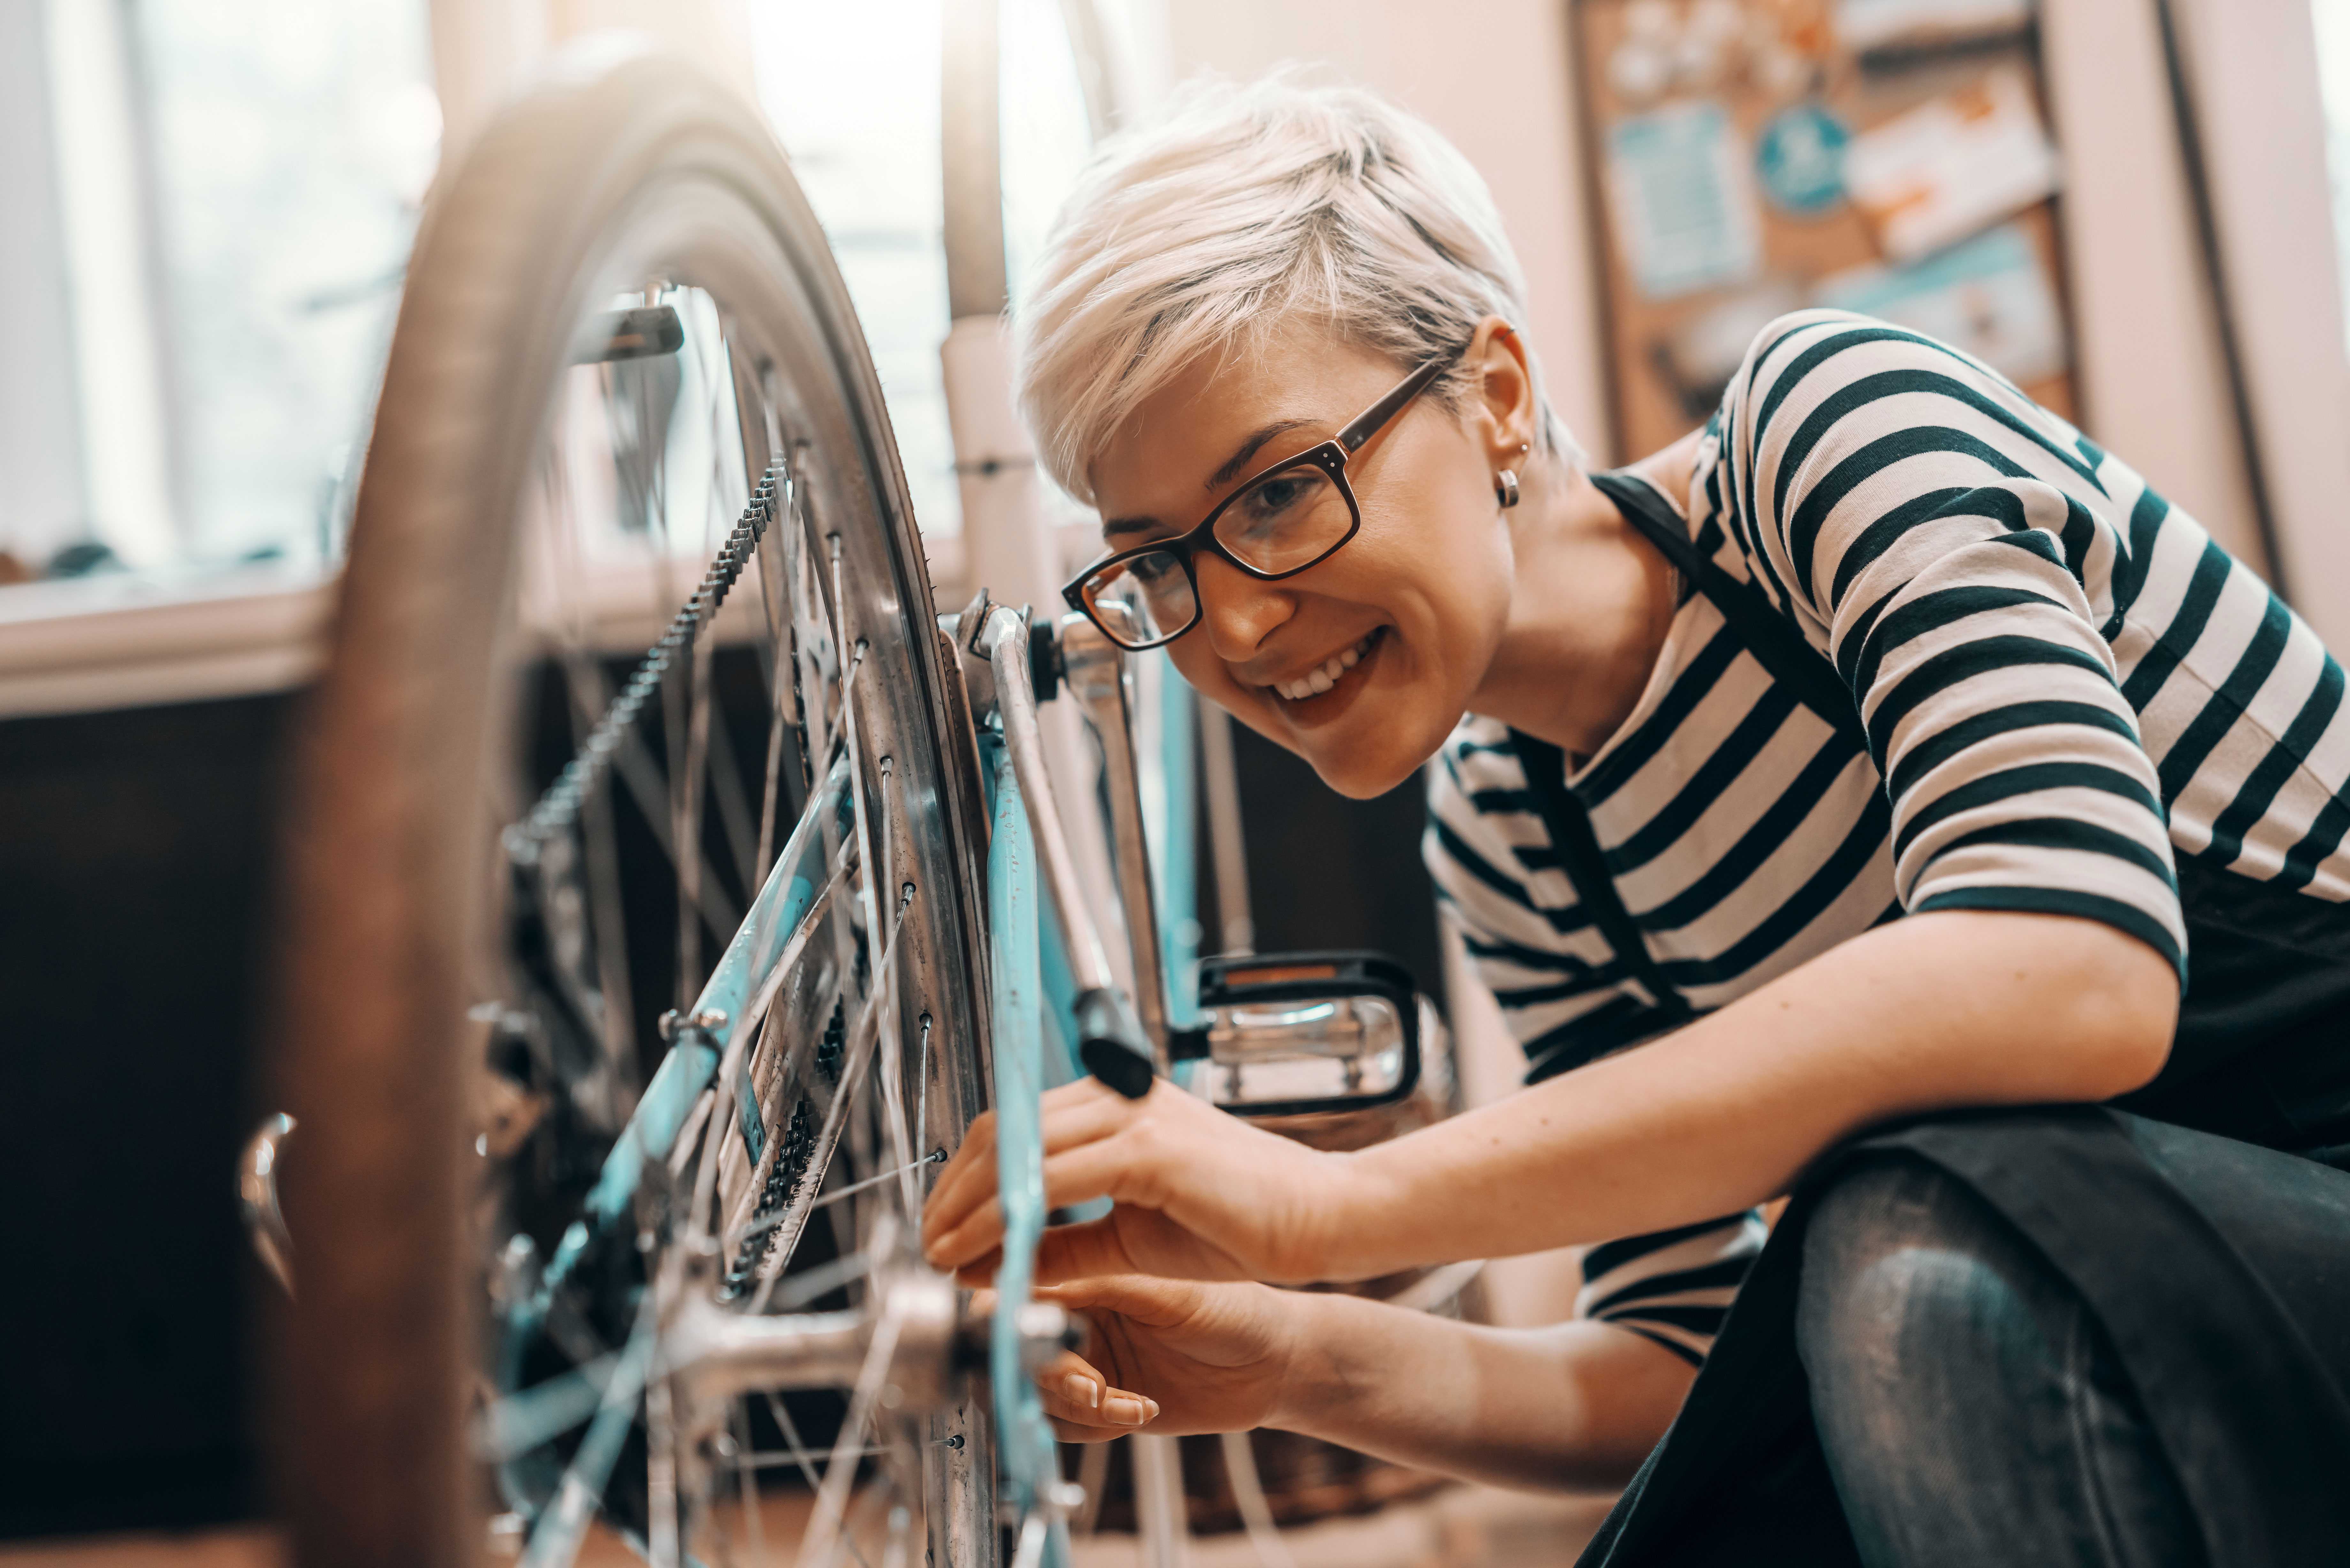 Apprentice working in bicycle repair shop